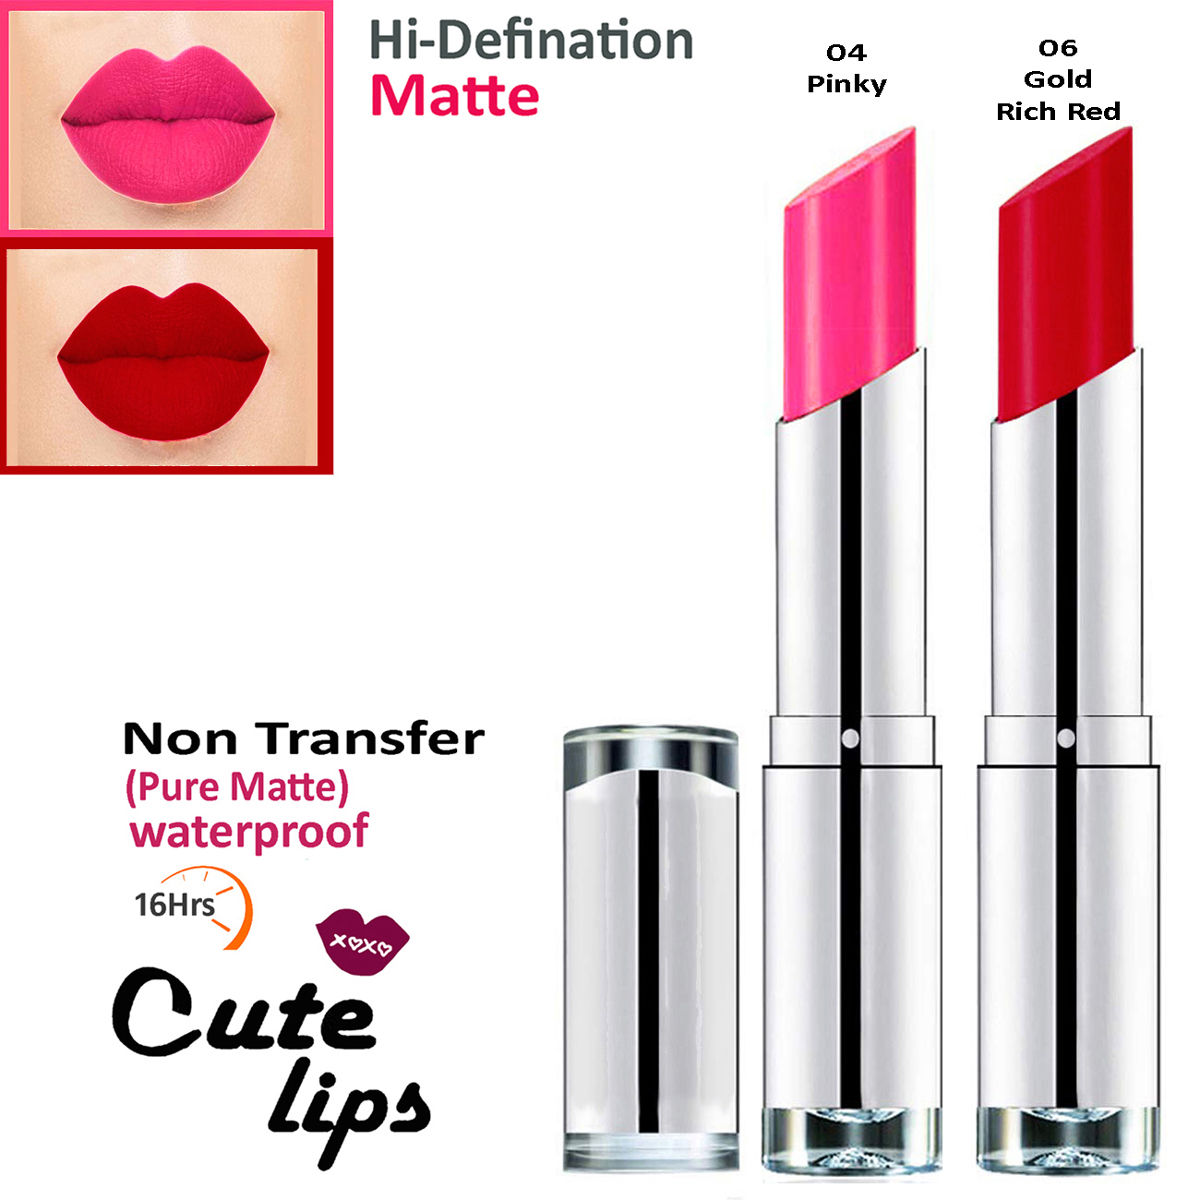 bq BLAQUE Cute Lips Non Transfer Matte Lipstick 2.4 gm each - 04 ...